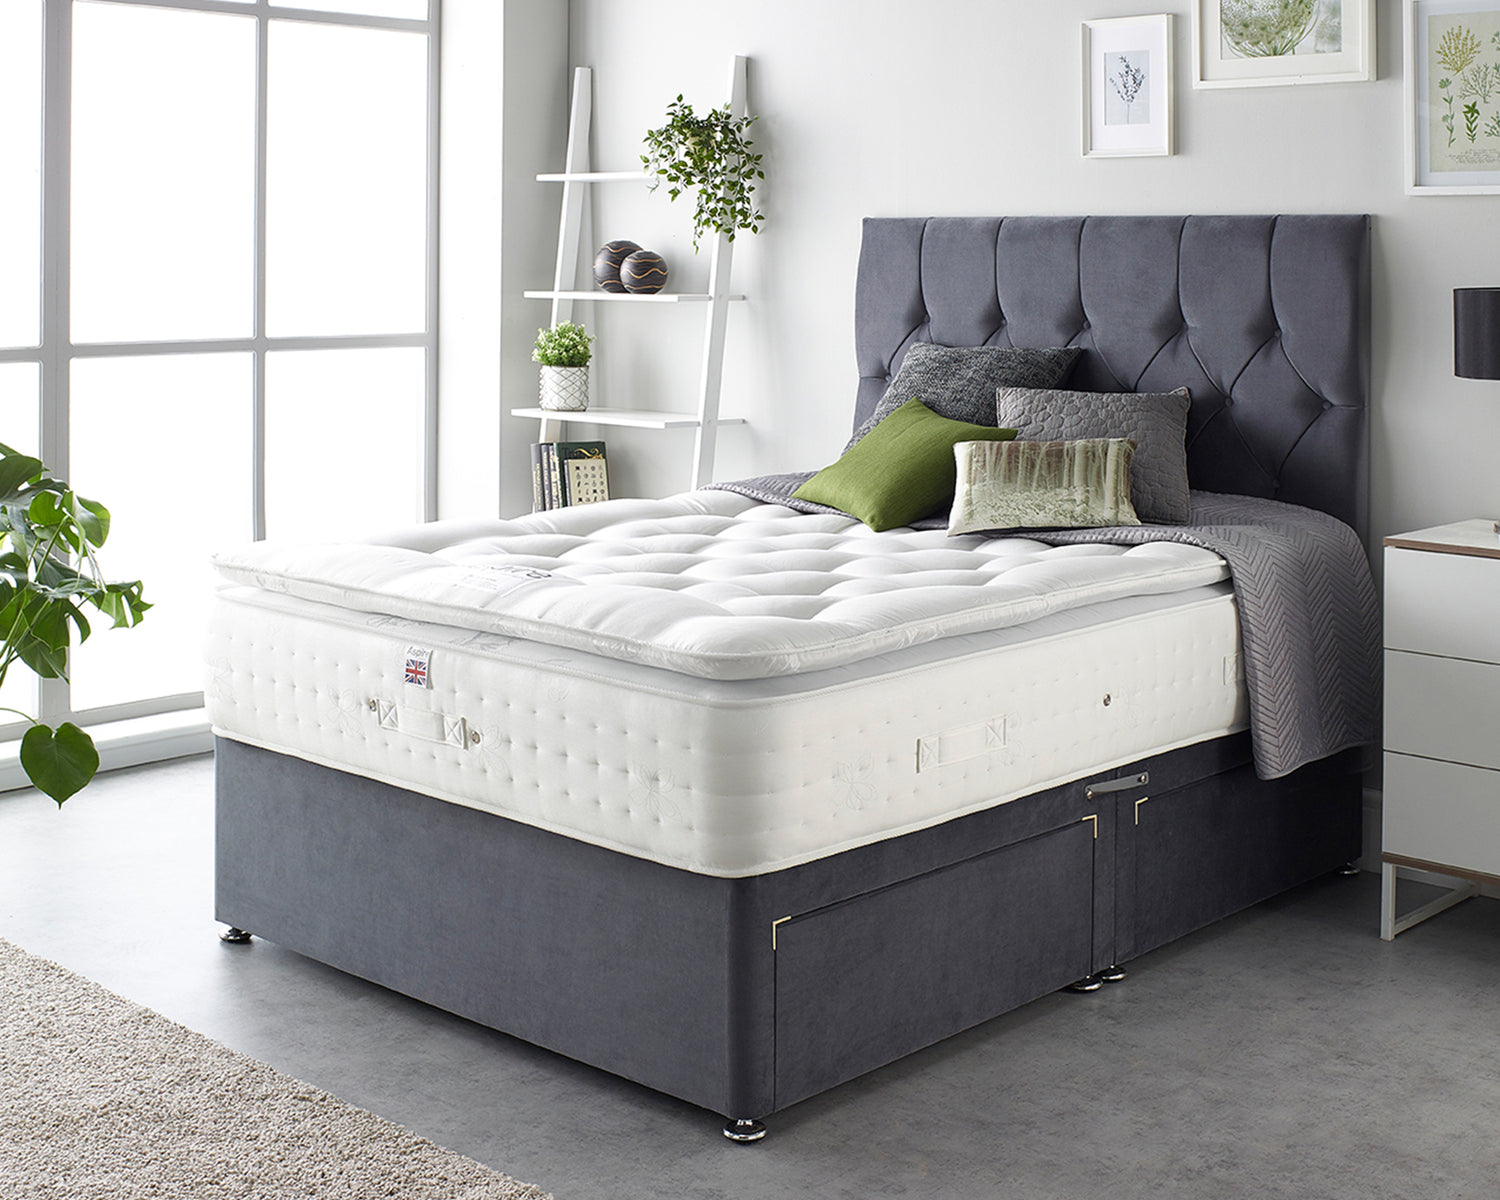 Aspire Natural Cashmere 1000 pocket Pillowtop Mattress-Better Bed Company 